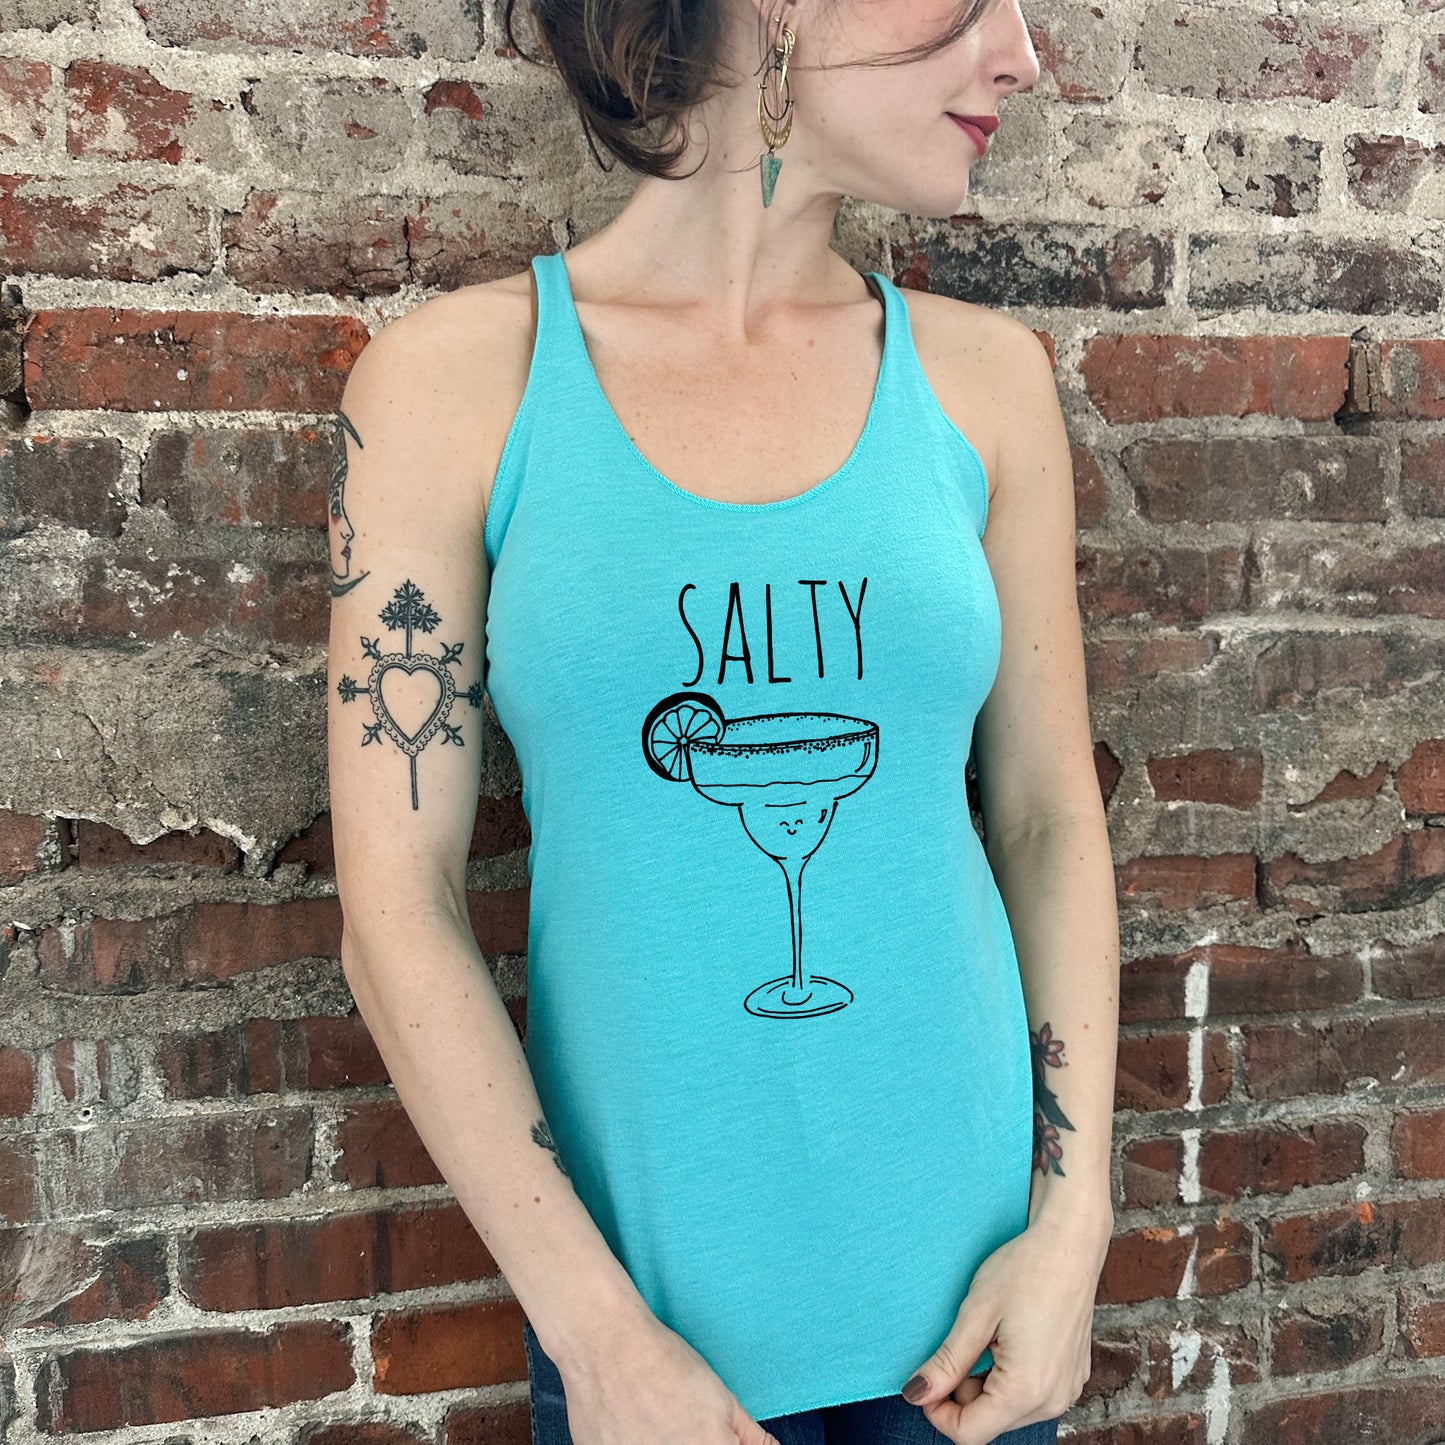 Salty (Margarita) - Women's Tank - Heather Gray, Tahiti, or Envy